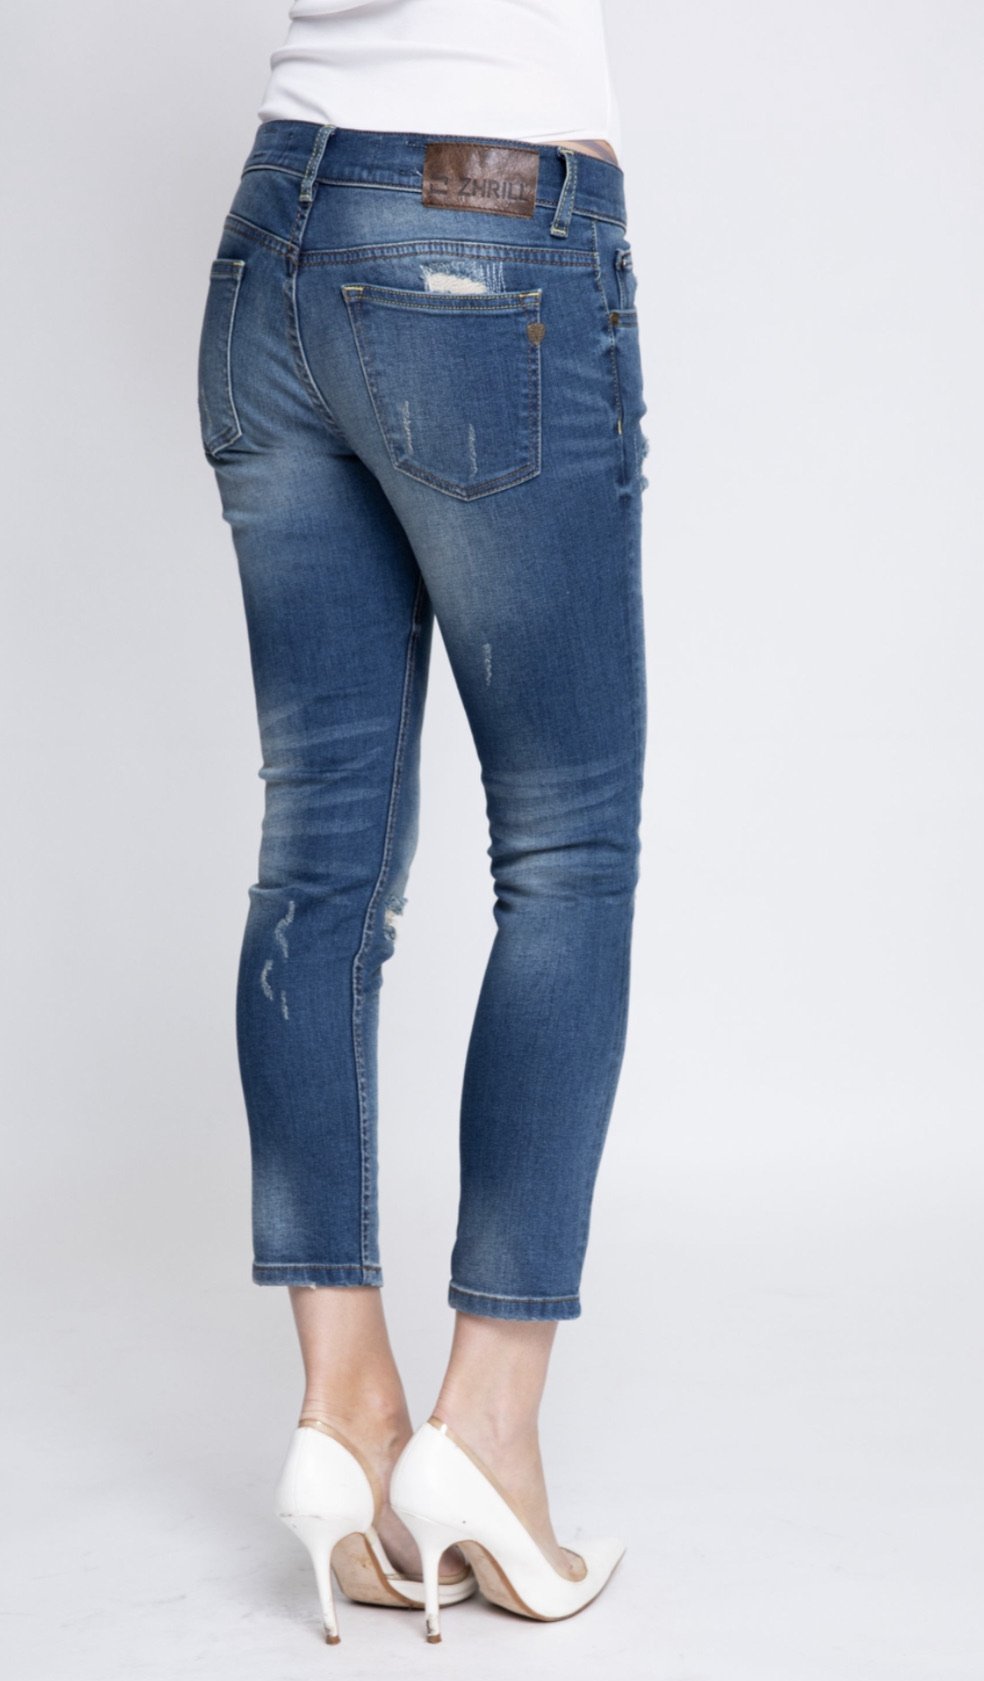 Zhrill Anita Blue 7/8 Jeans - Shop 9